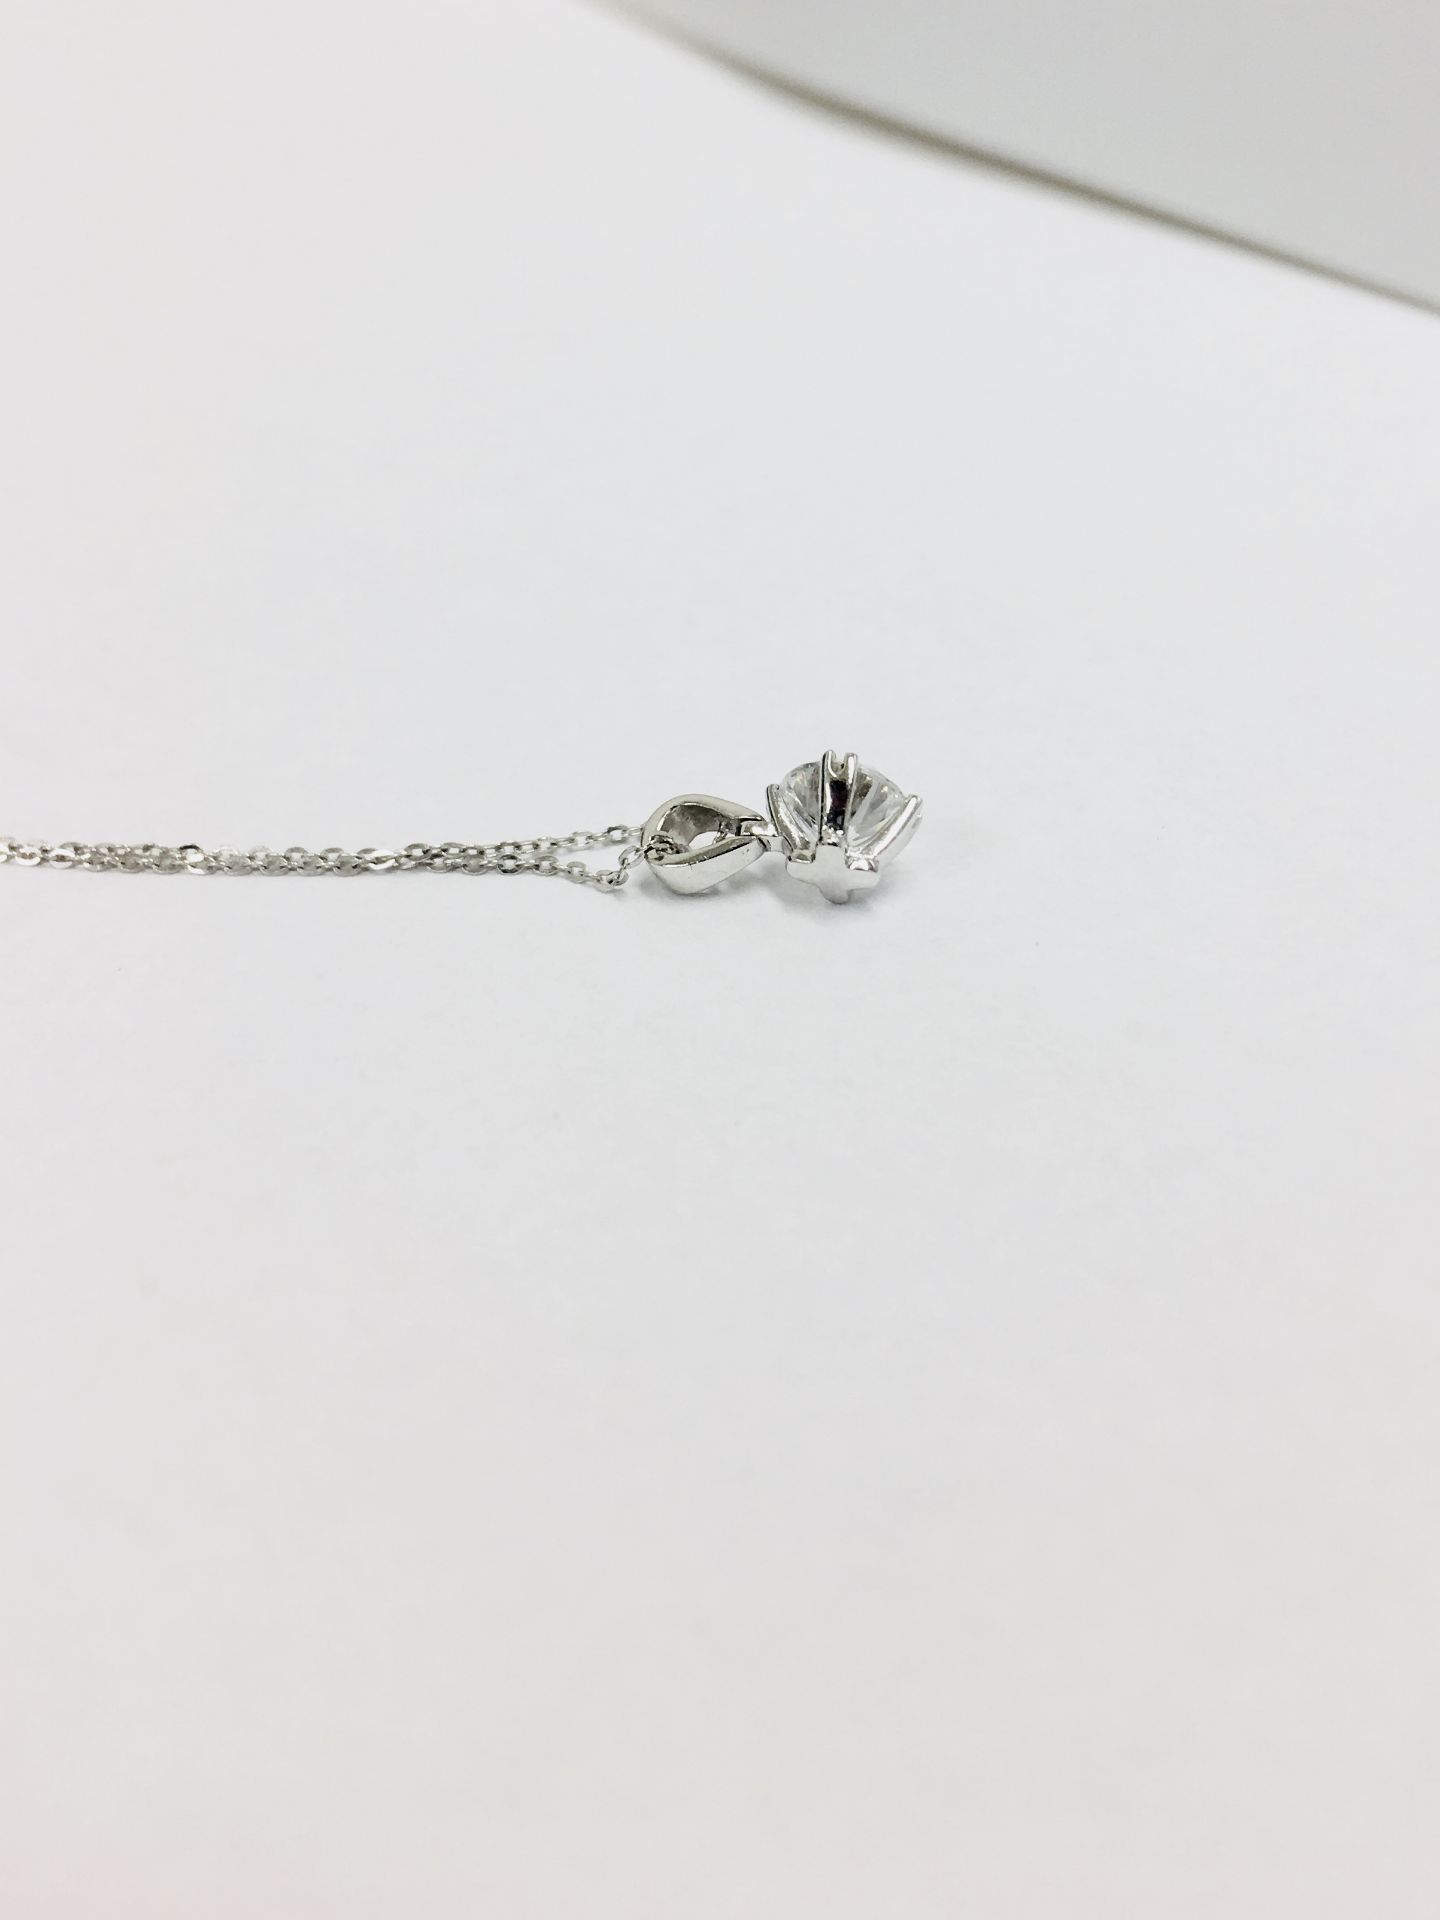 Platinum 1ct diamond solitaire pendant ,1ct natural diamond h colour si2 clarity,1.9gms platinum - Image 3 of 5